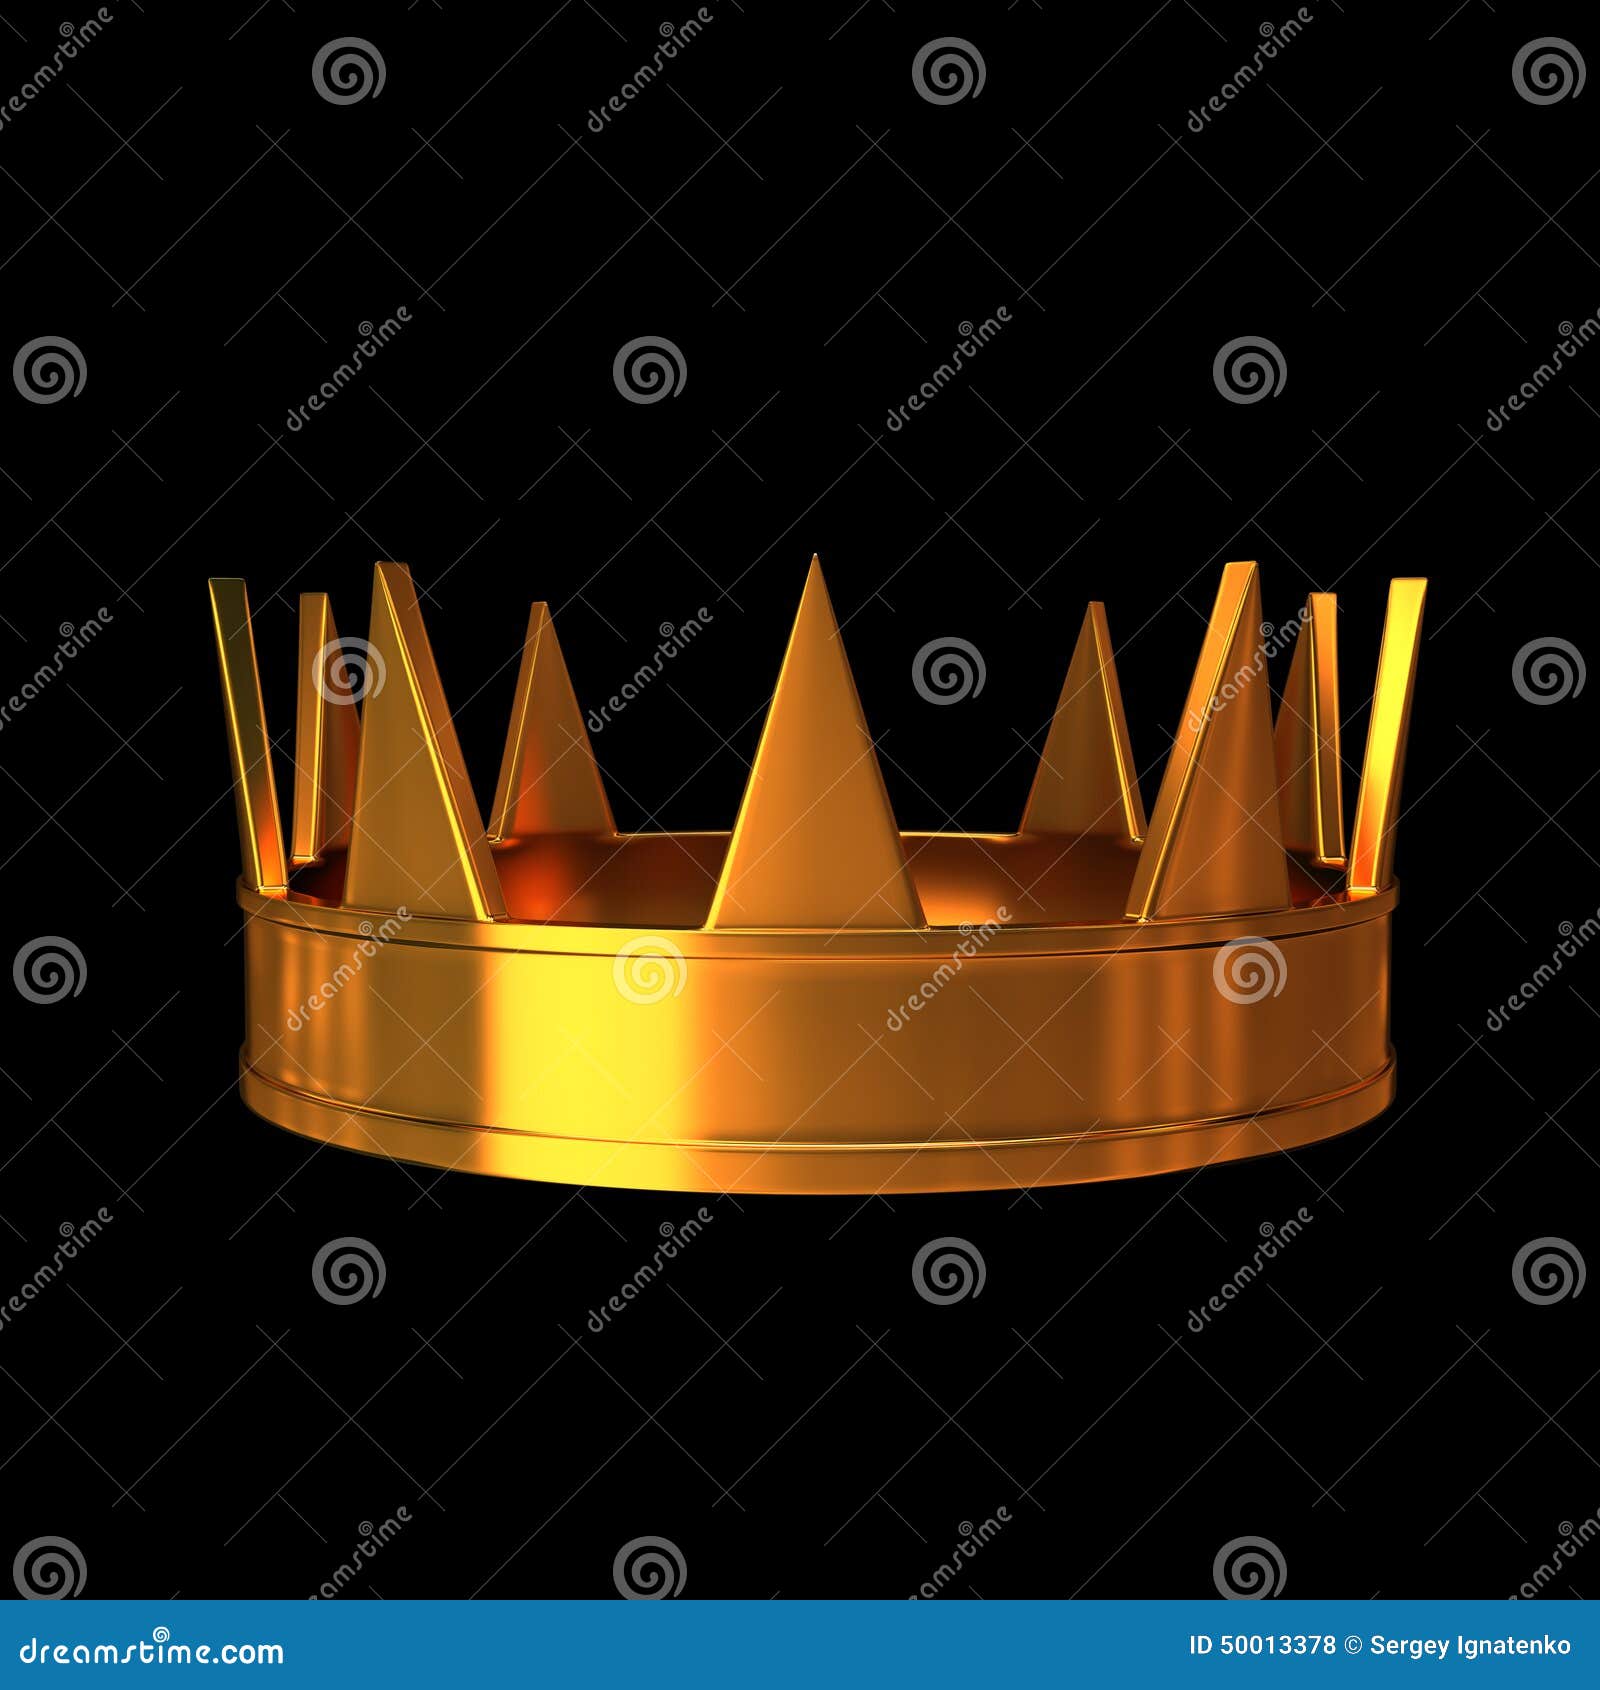 Image result for Crown